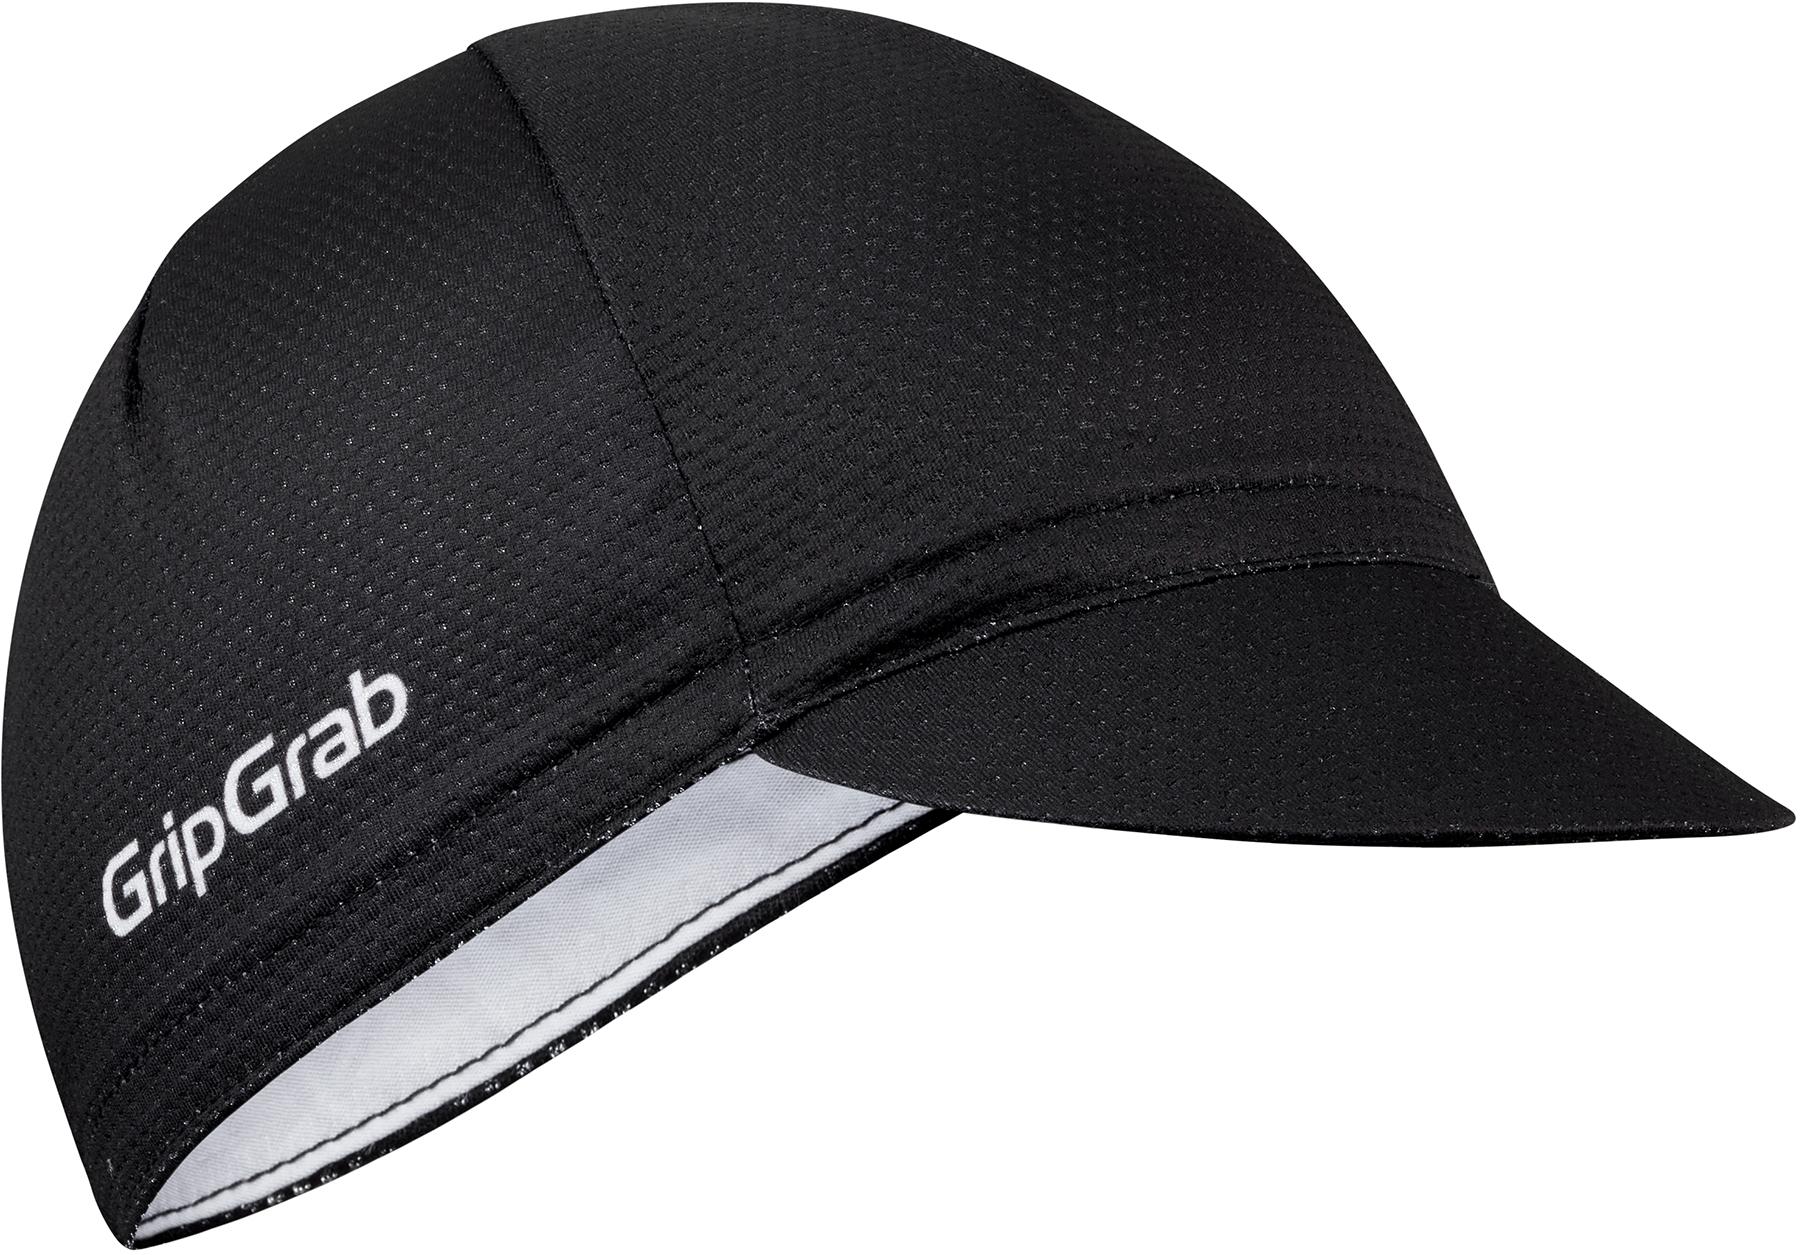 Gripgrab Lightweight Summer Cycling Cap - Black